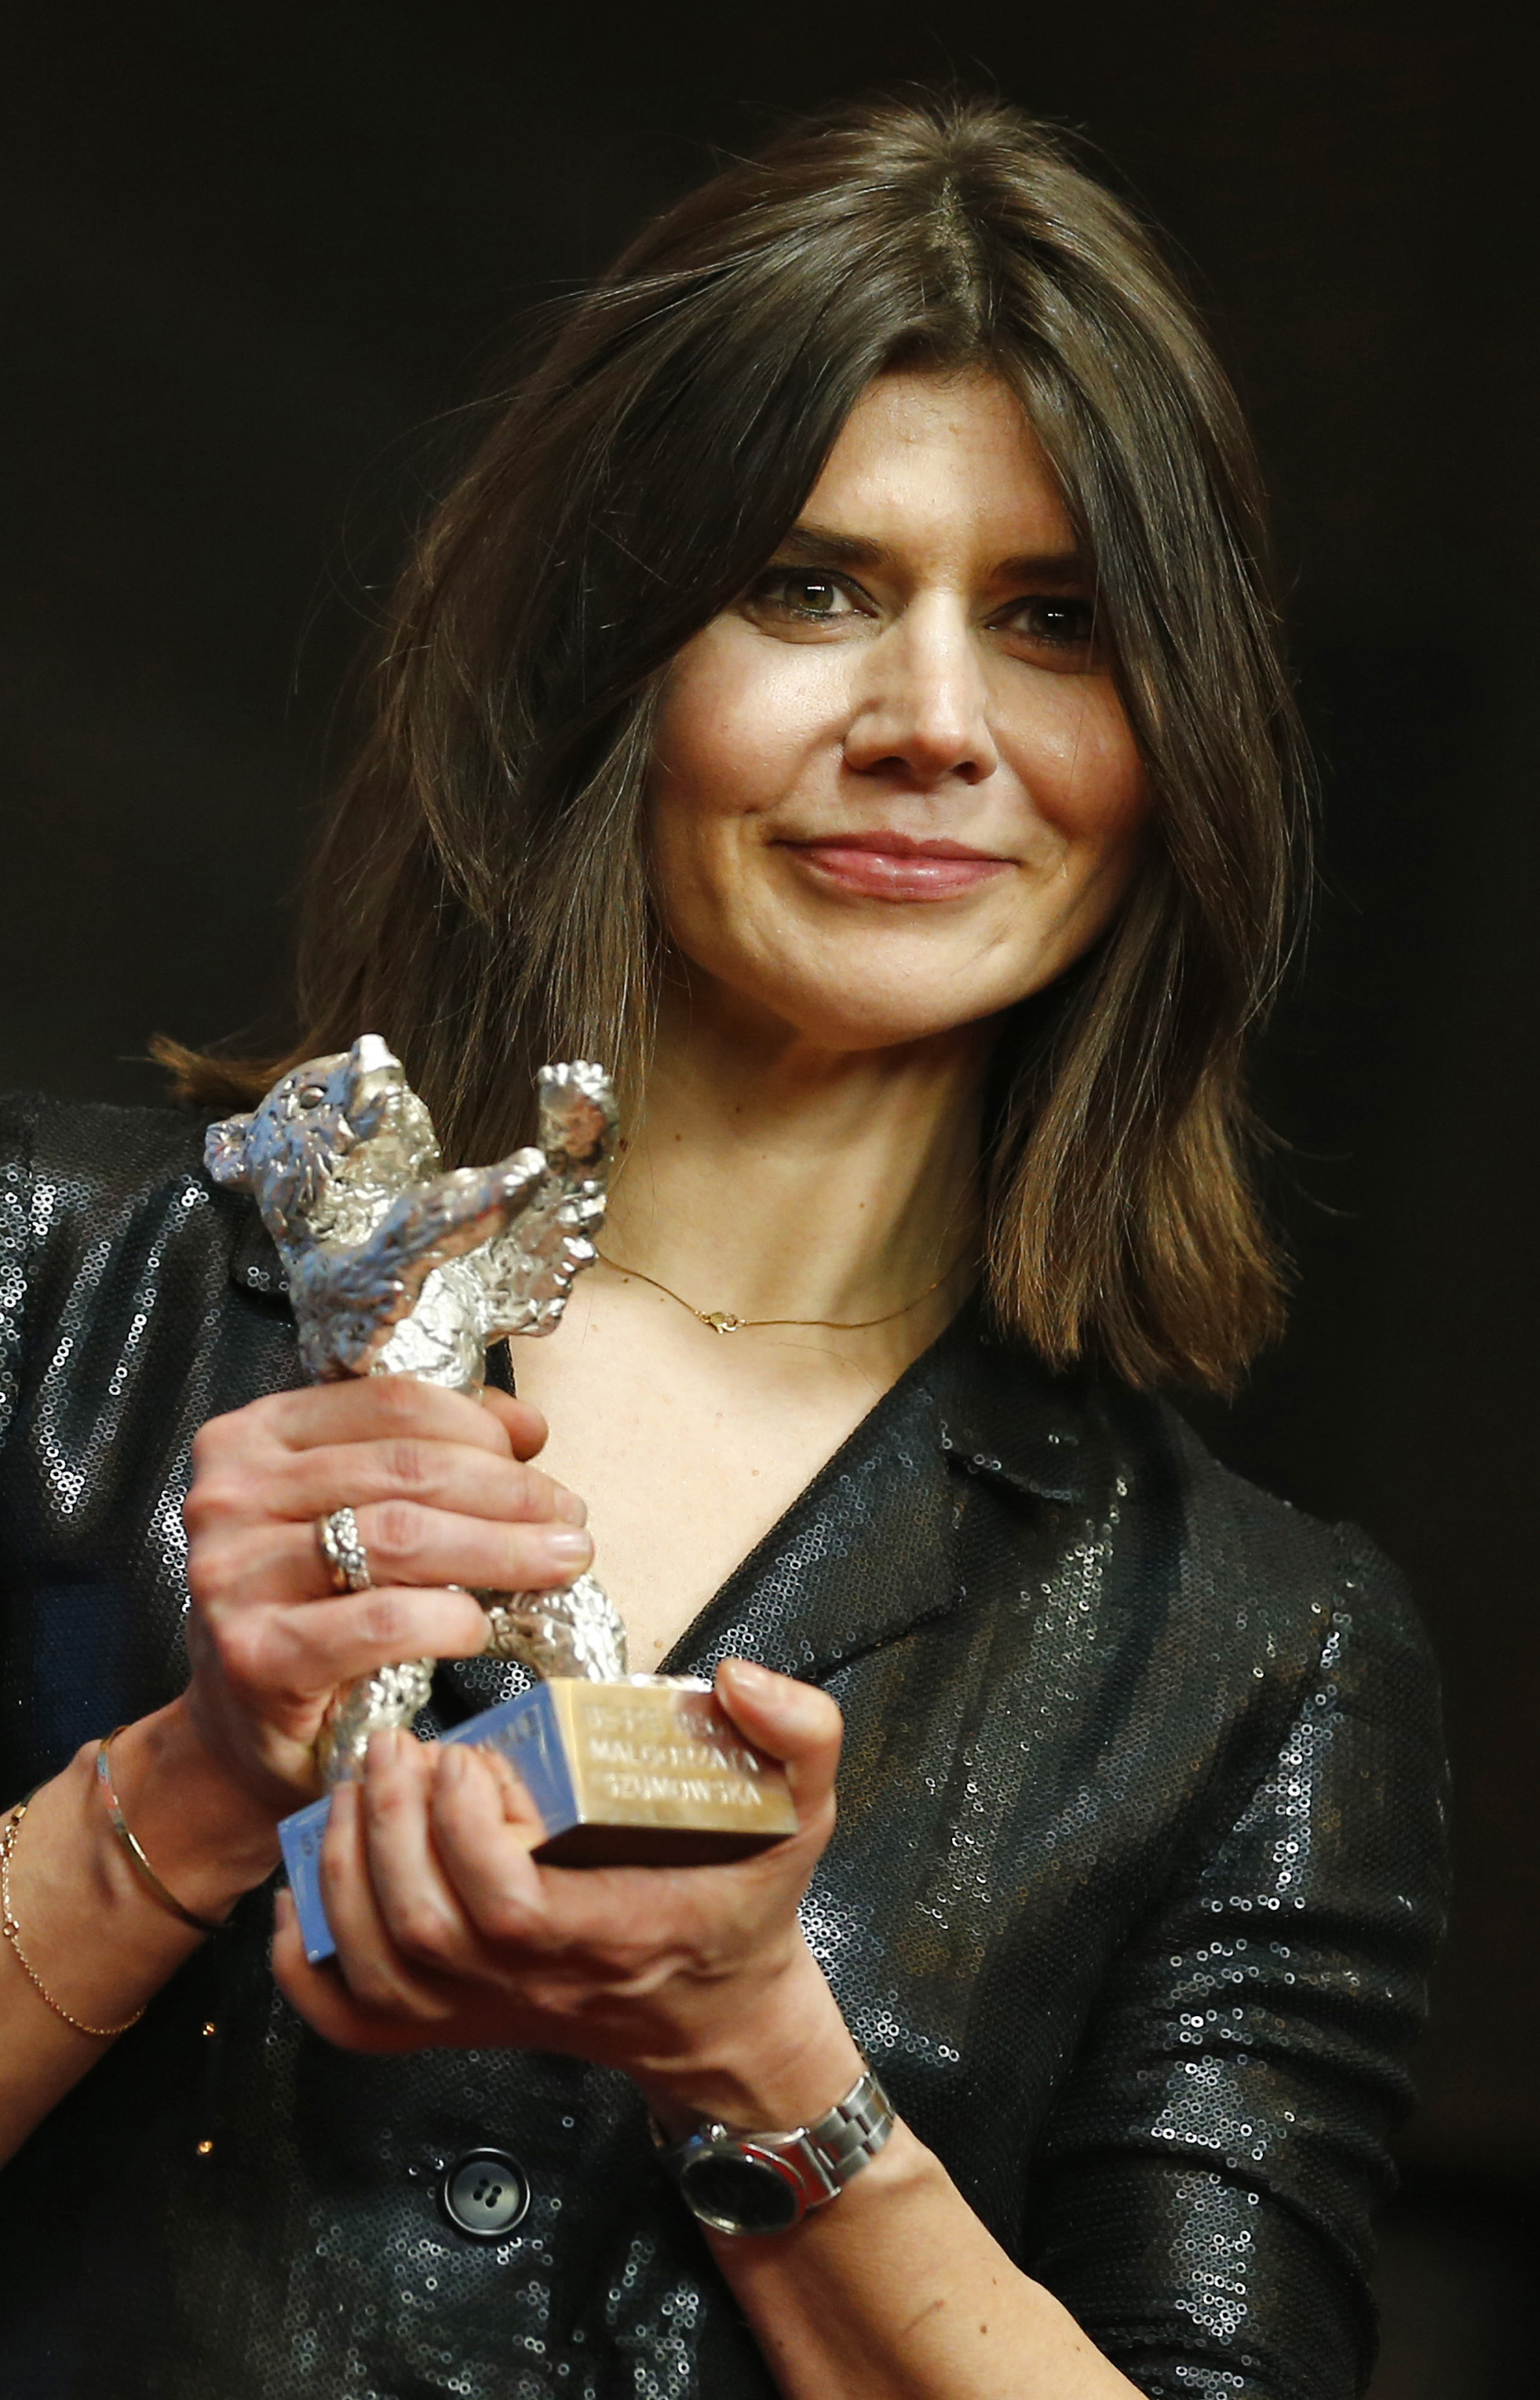 Malgorzata Szumowska holds the Silver Bear for Best Director forBody!during a press conference after the award ceremony at the 2015 Berlinale Film Festival in Berlin, Germany, Saturday, Feb. 14, 2015.